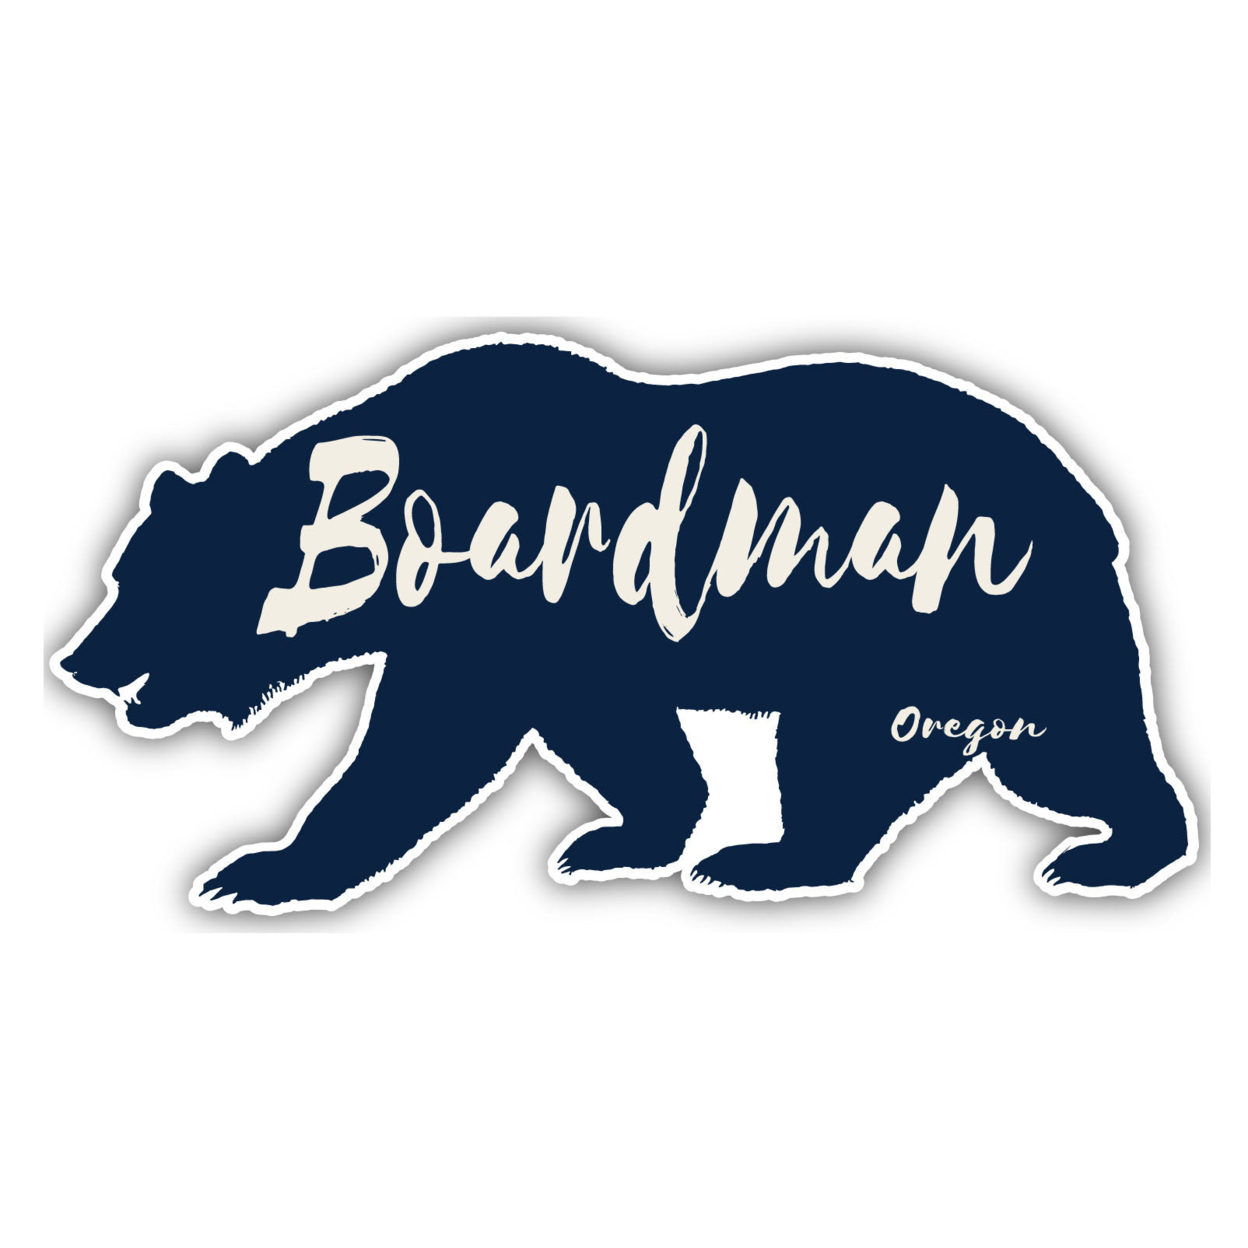 Boardman Oregon Souvenir Decorative Stickers (Choose Theme And Size) - Single Unit, 10-Inch, Tent